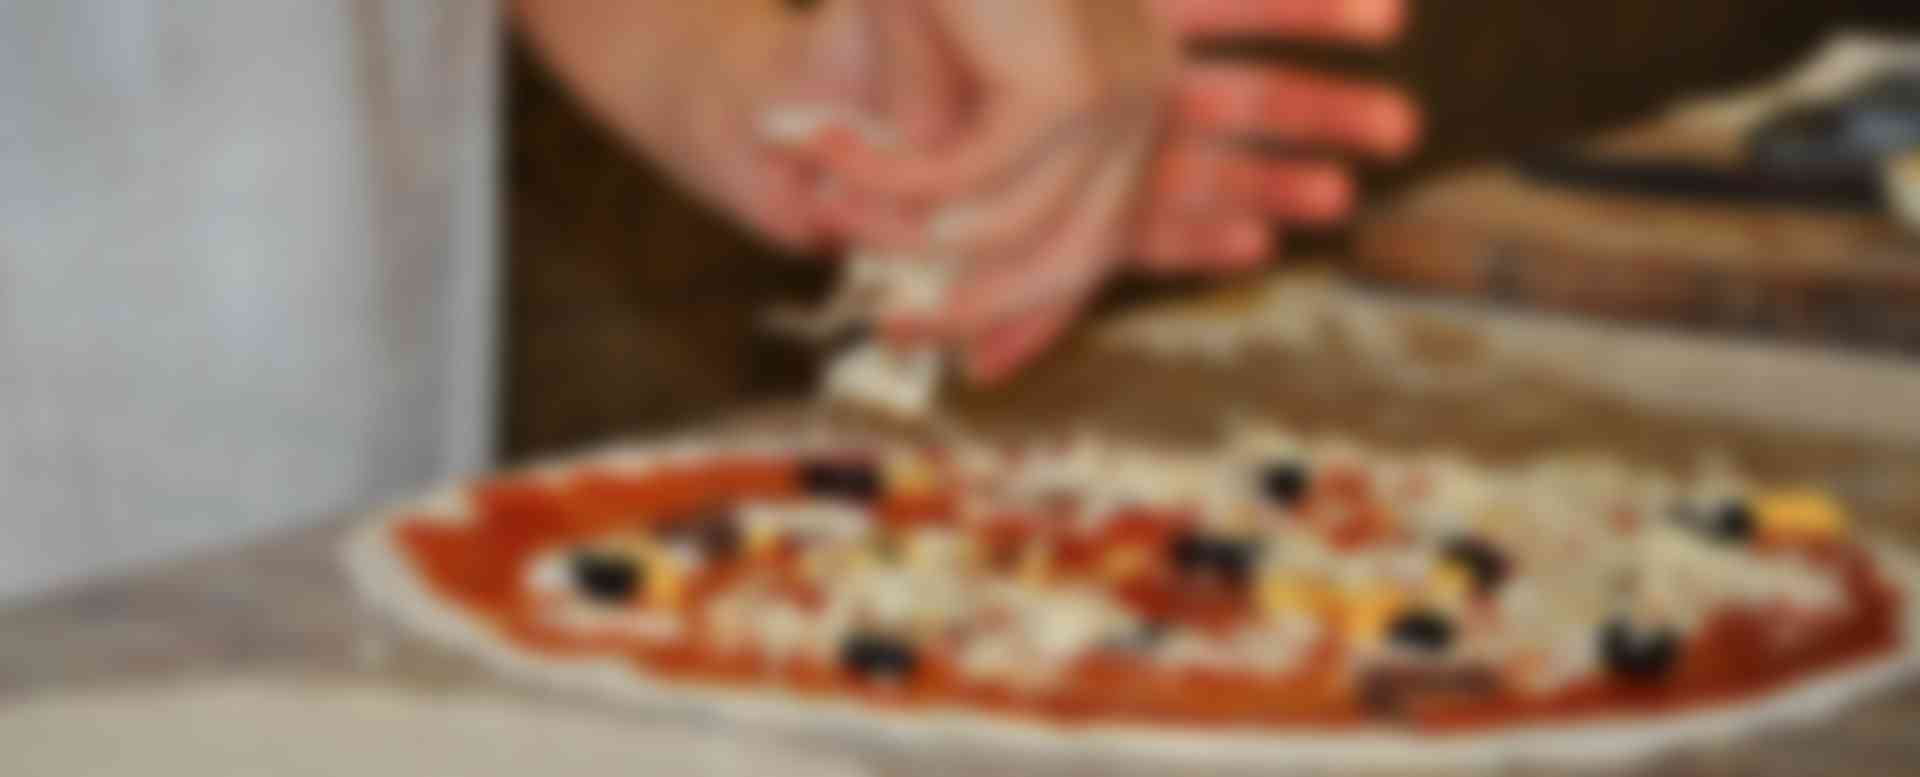 Pizza Image 2